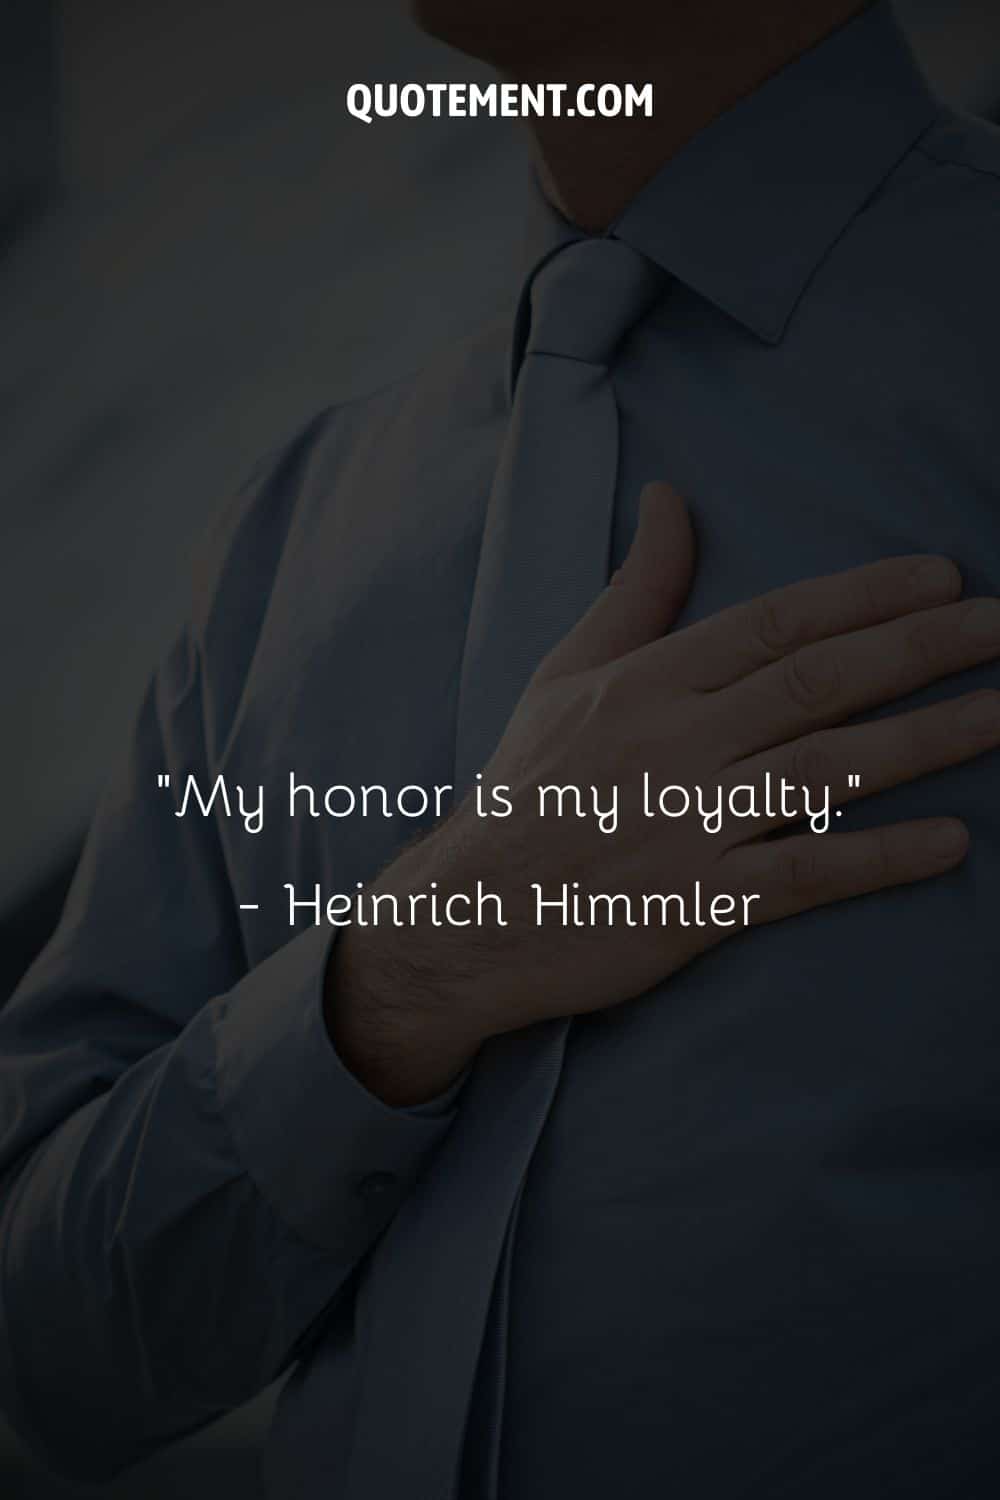 “My honor is my loyalty.” — Heinrich Himmler